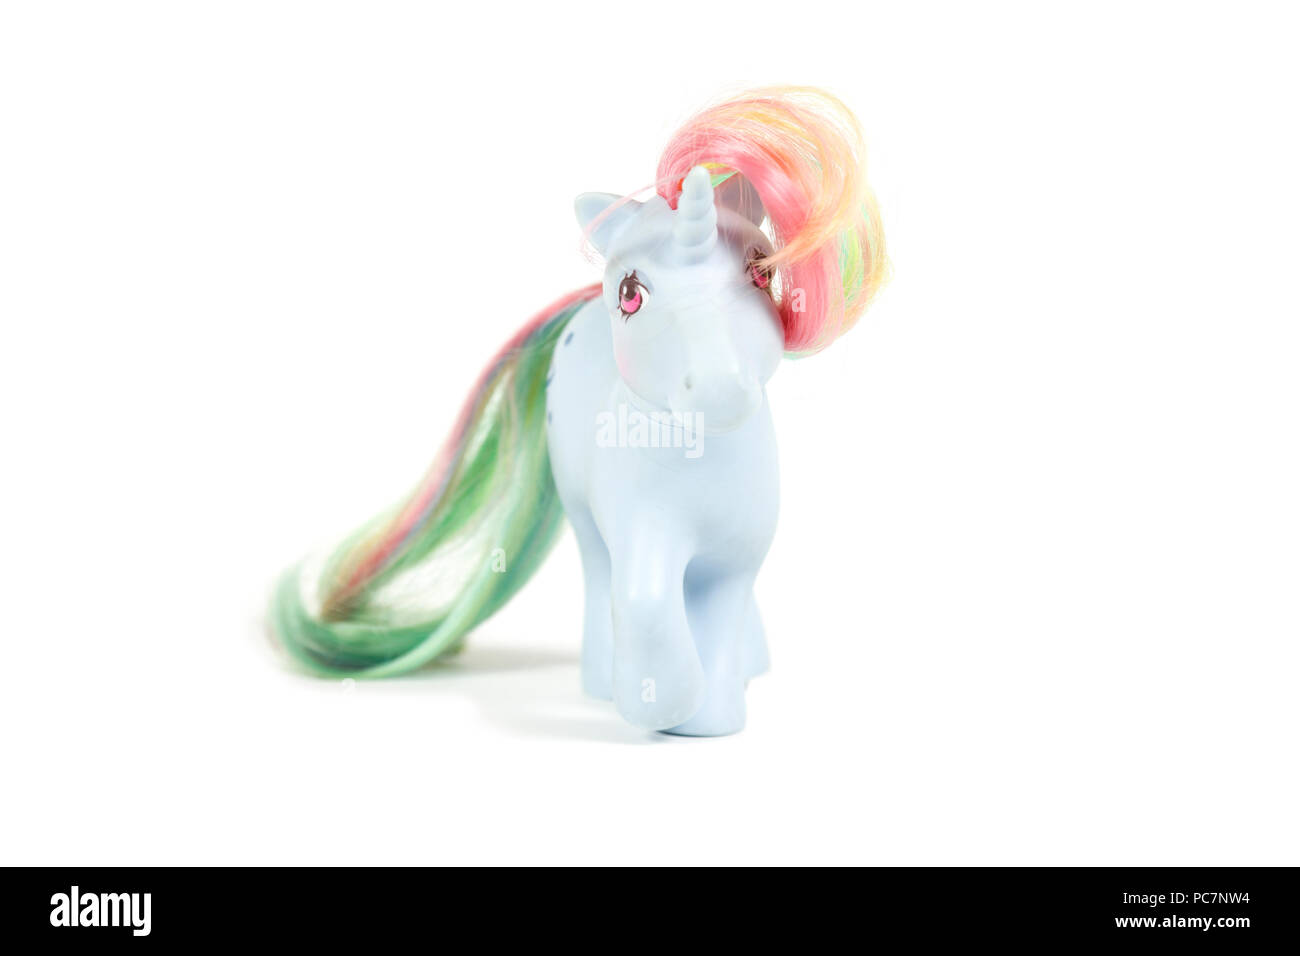 Adjustable Orderly Nine My little pony unicorn toy hi-res stock photography and images - Alamy